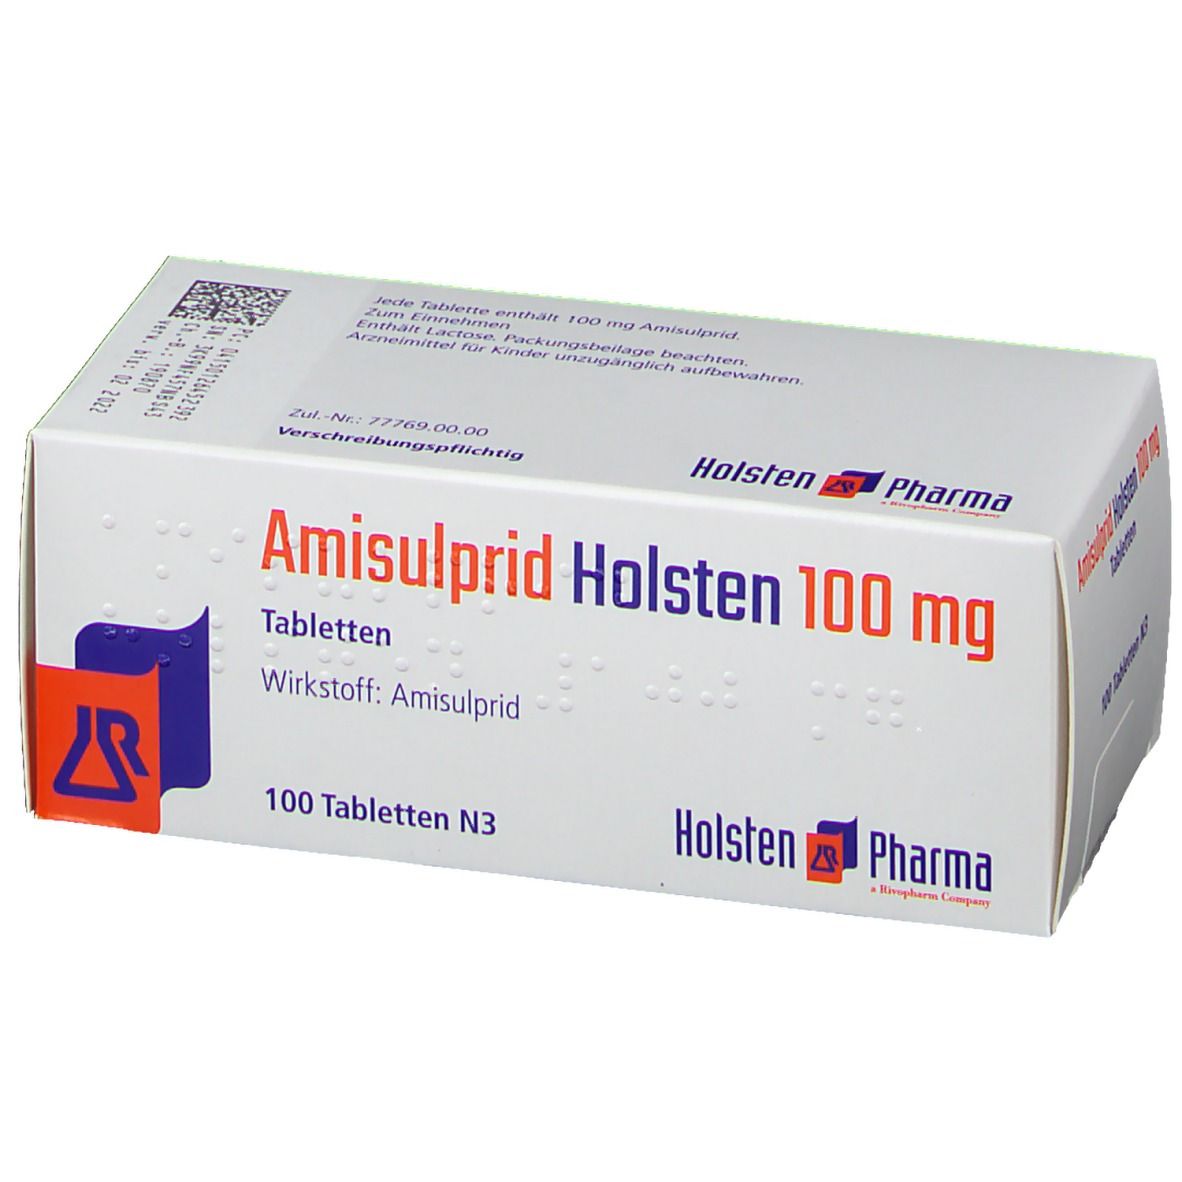 Amisulprid Holsten 100 mg